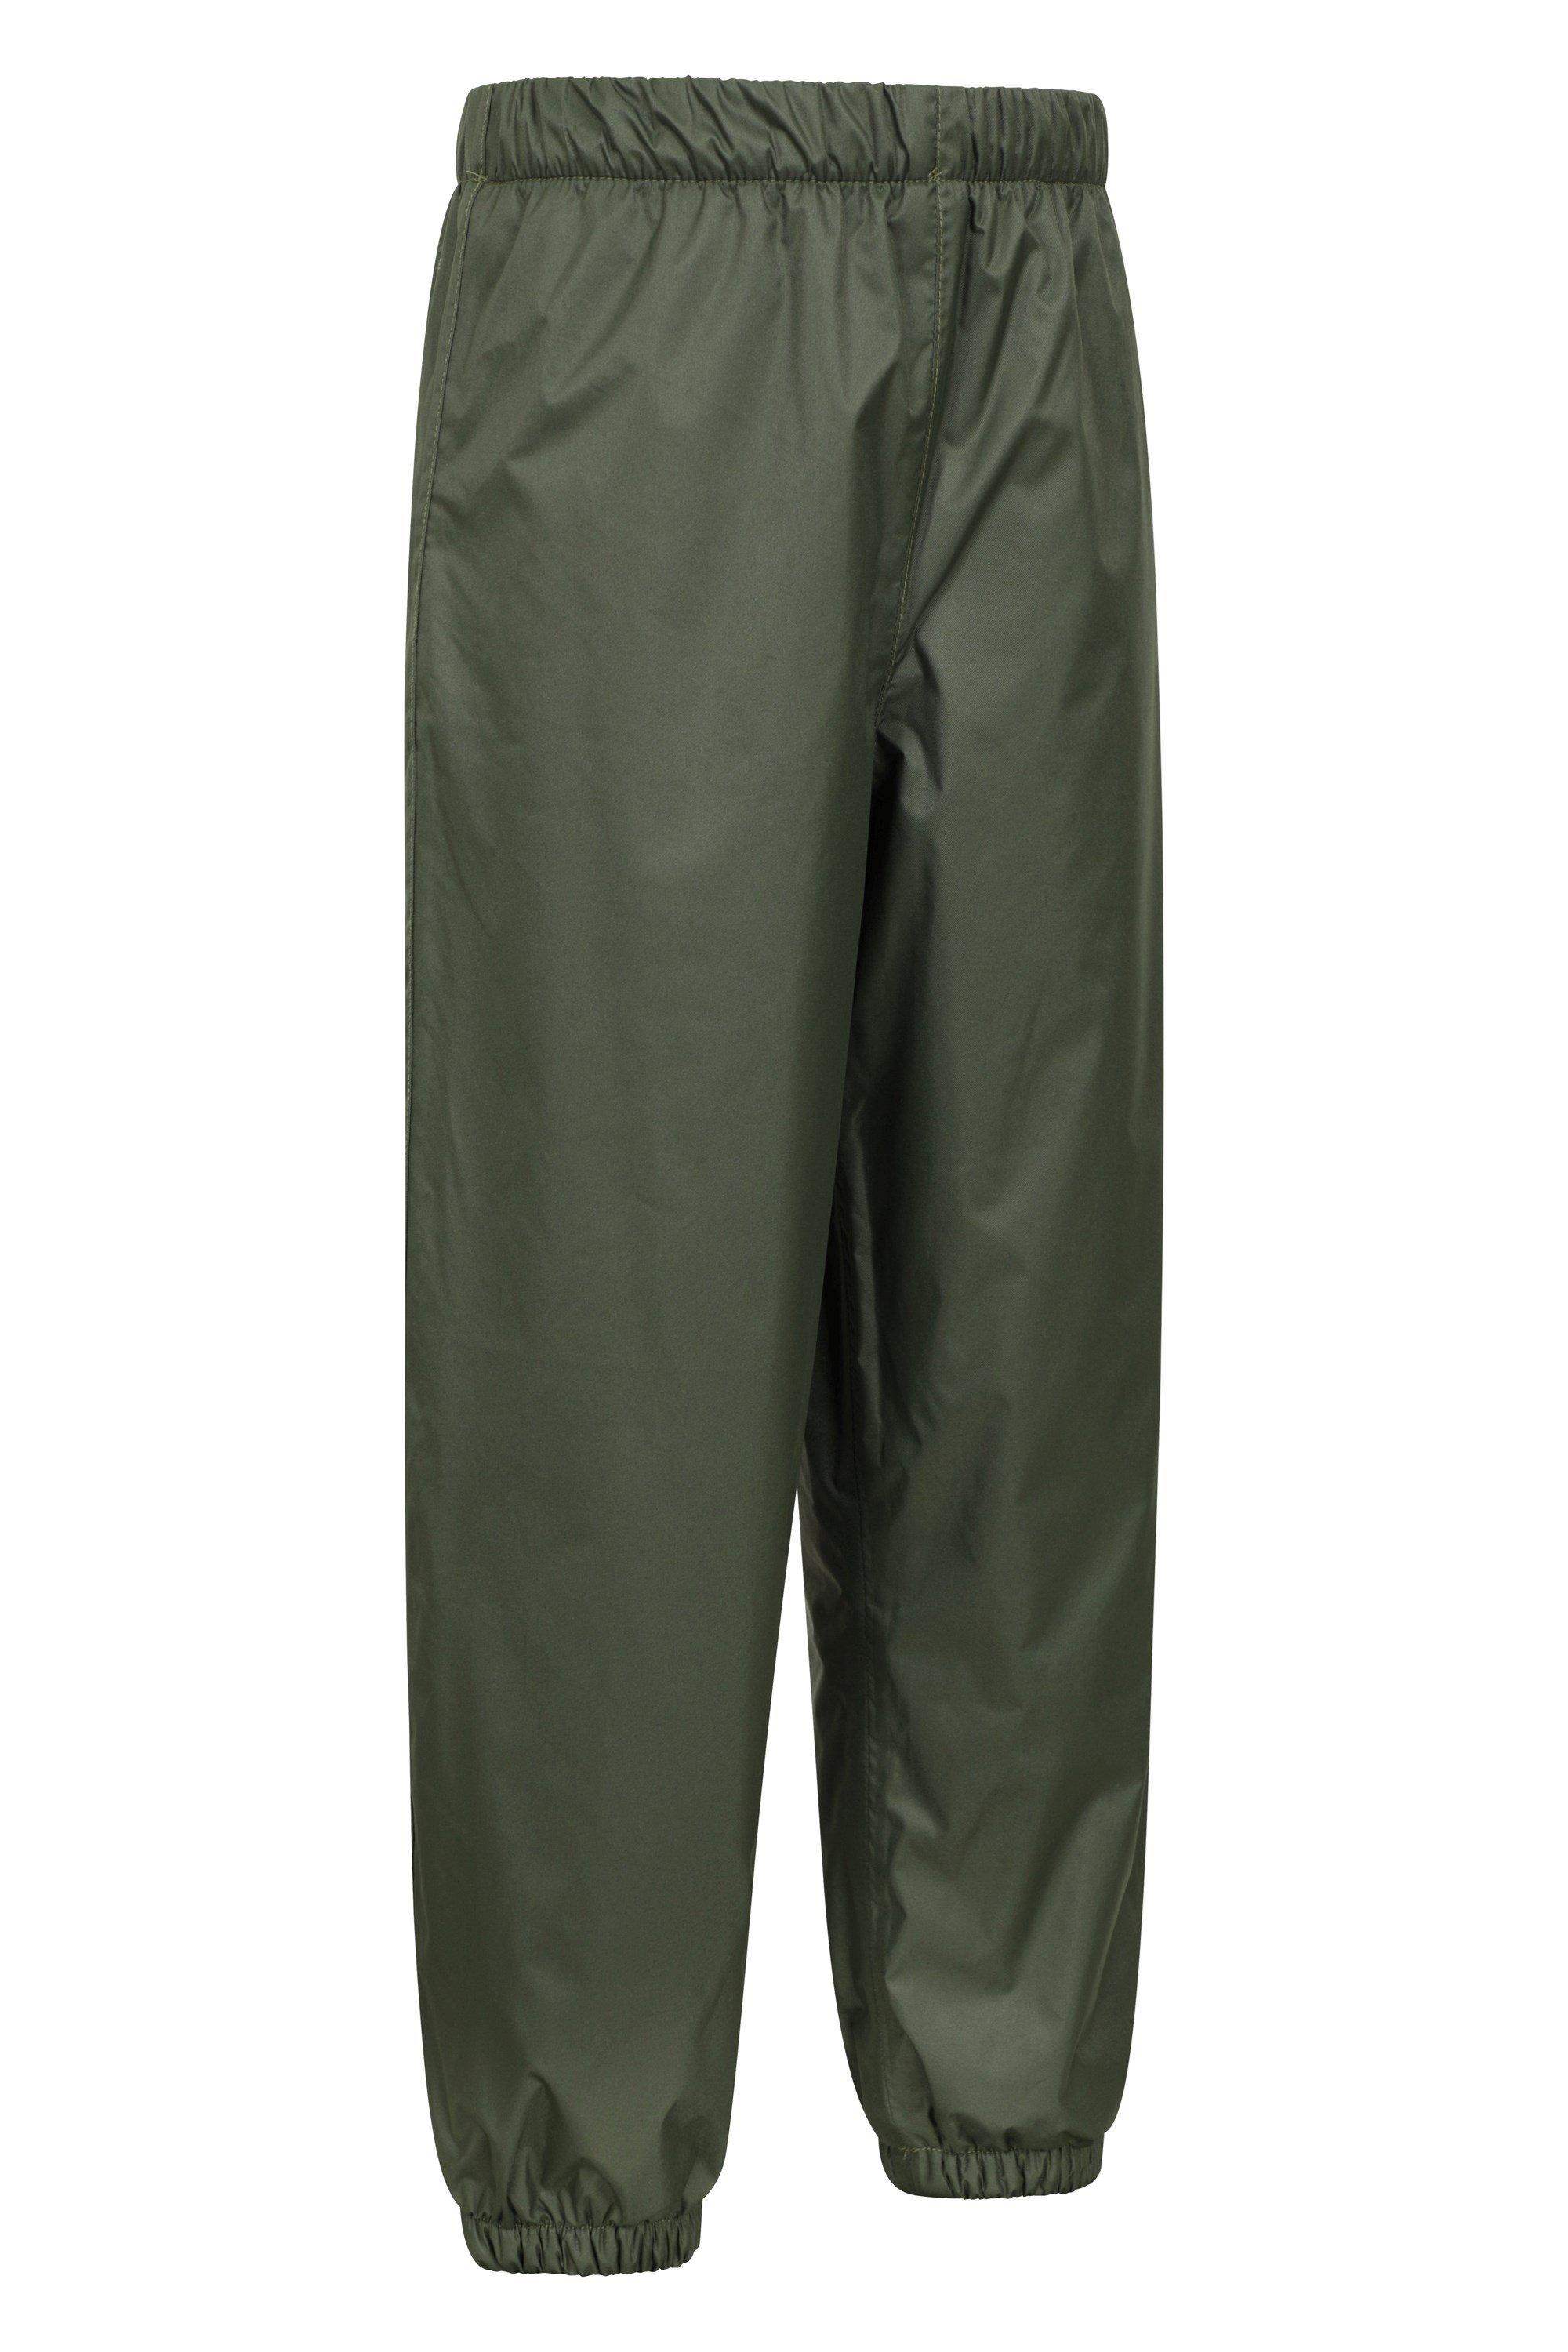 Mens Hiking Pants Windproof Waterproof Trousers Thermal Fleece Winter  Outdoor UK | eBay